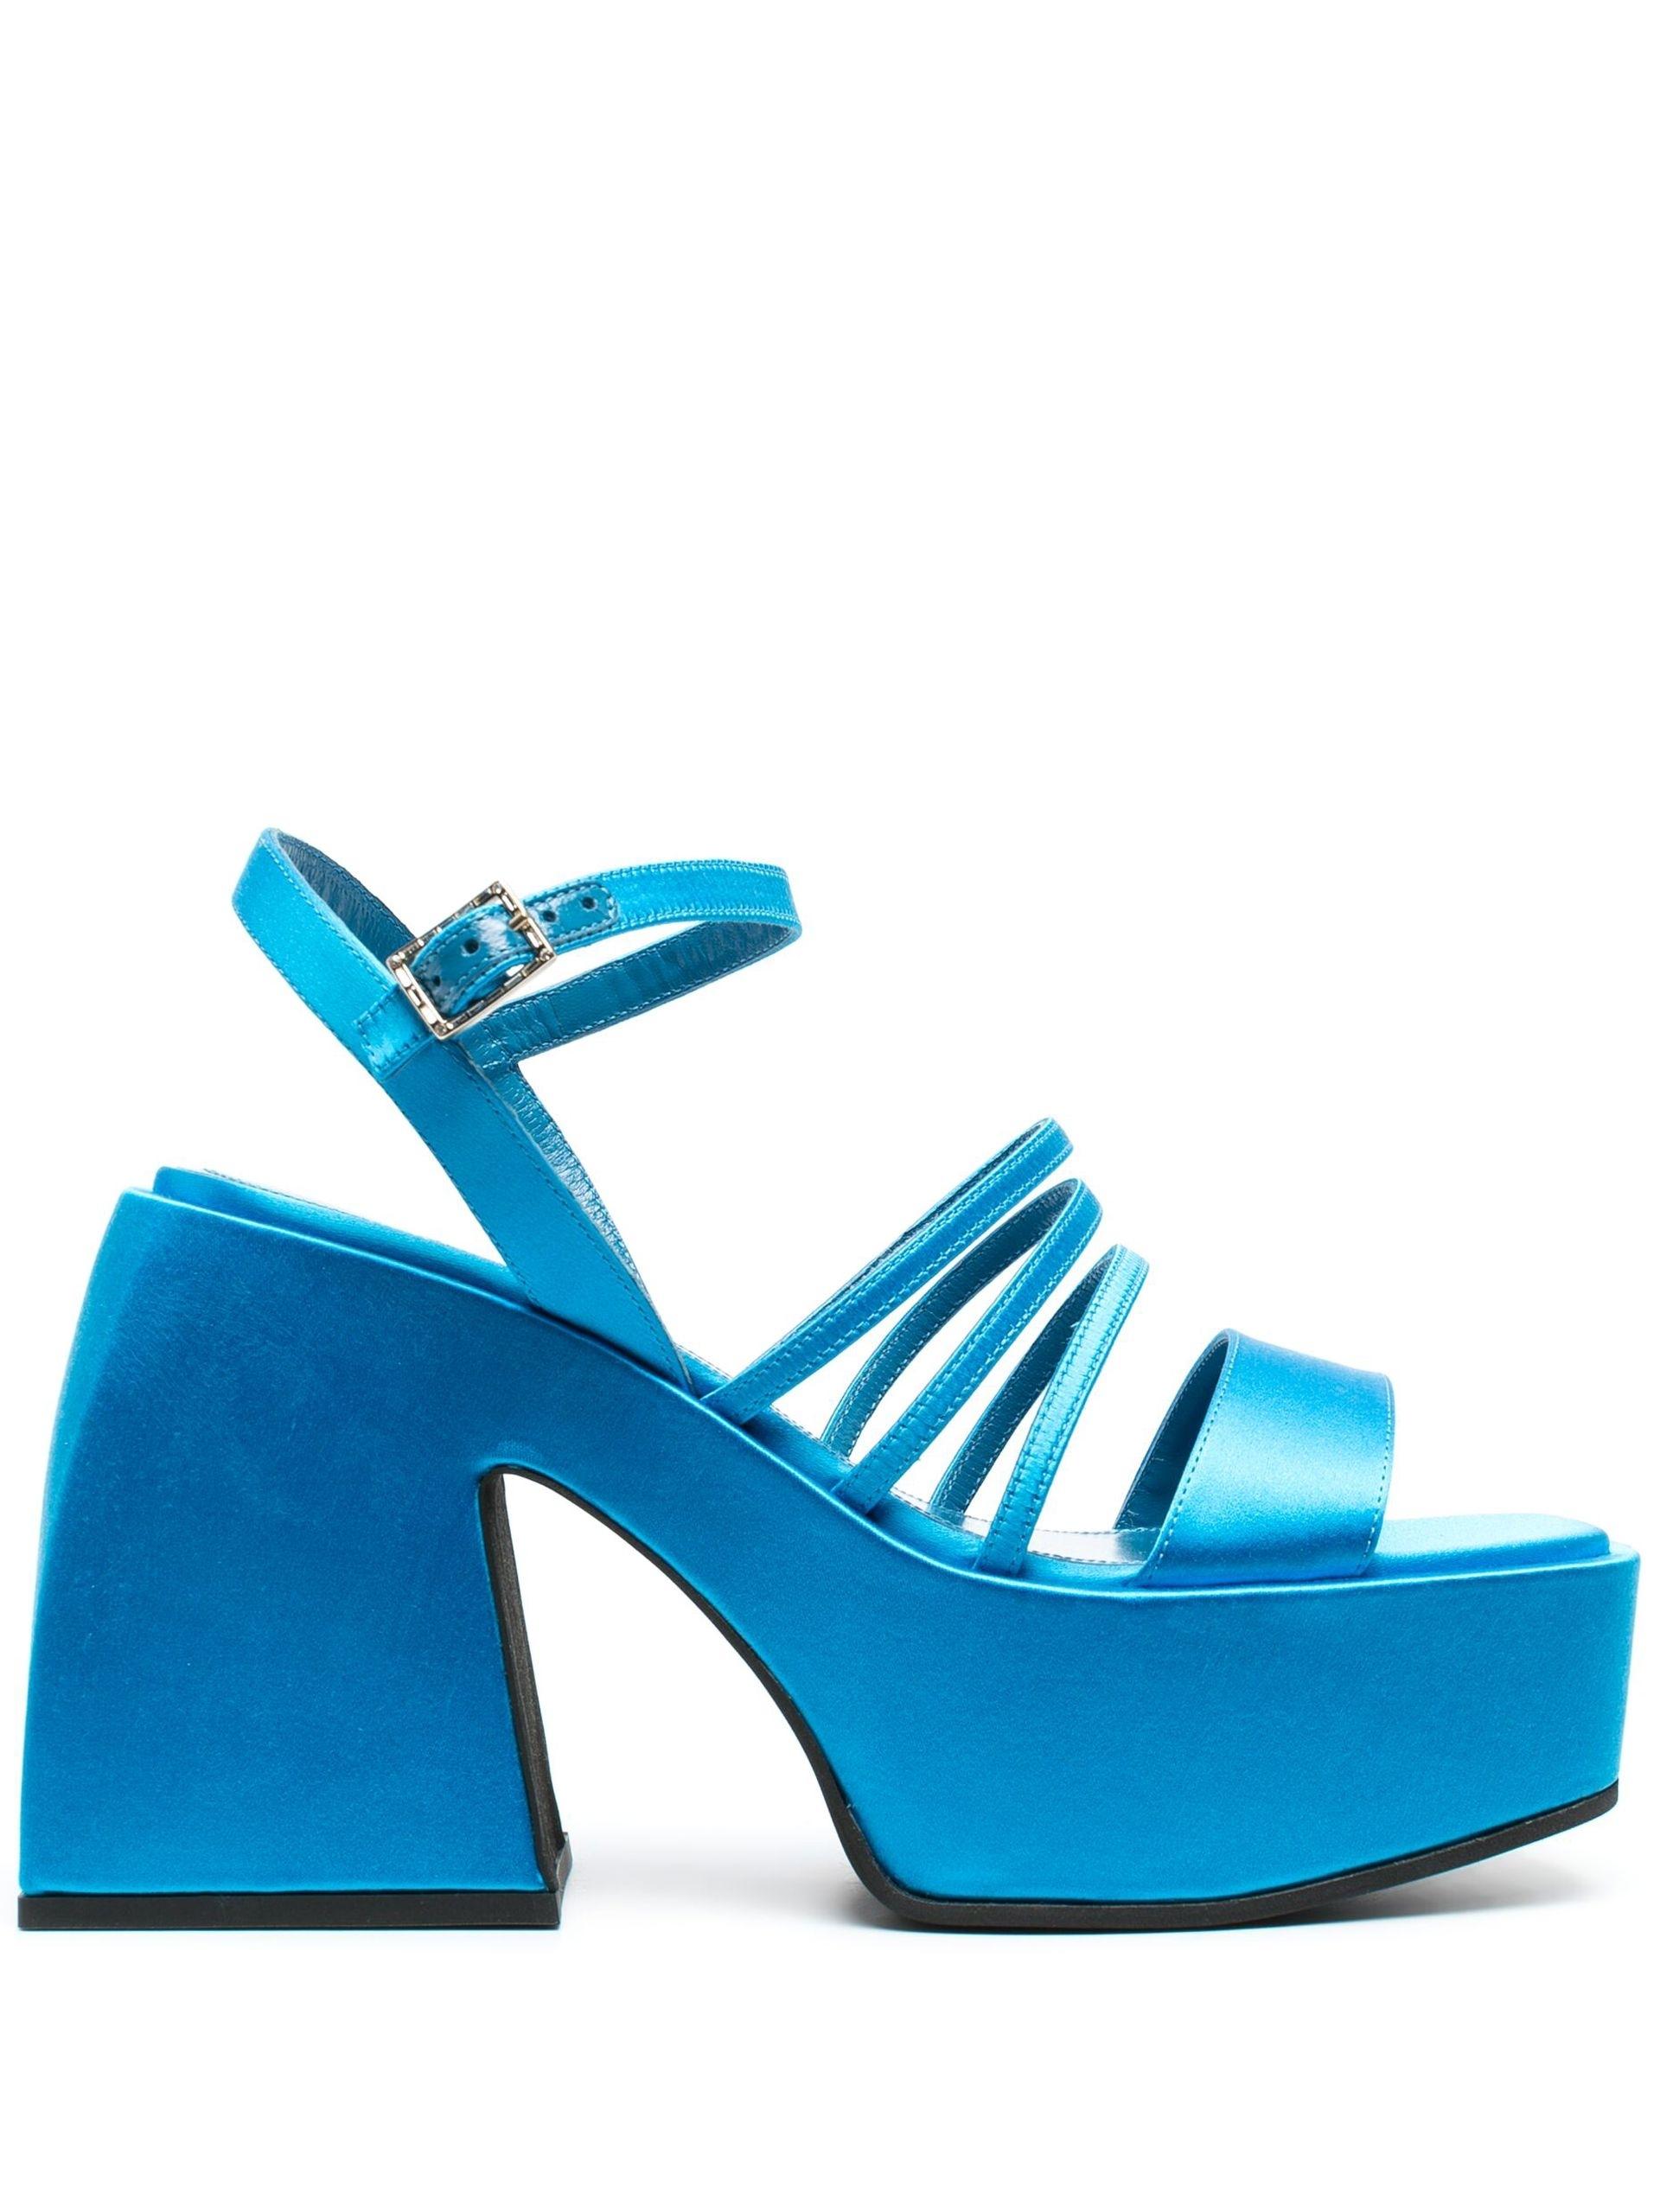 NODALETO Bulla Chibi Satin Sandals in Blue | Lyst